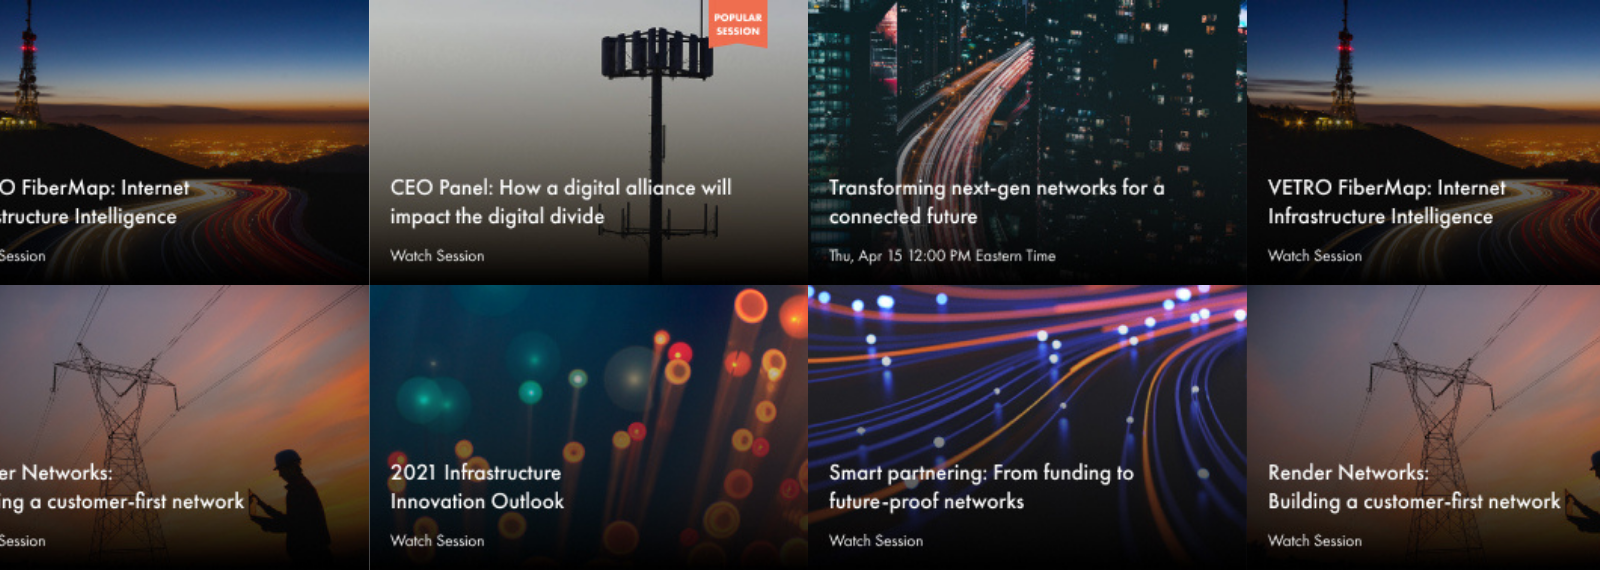 Virtual highlights from Digital Network Week 2021